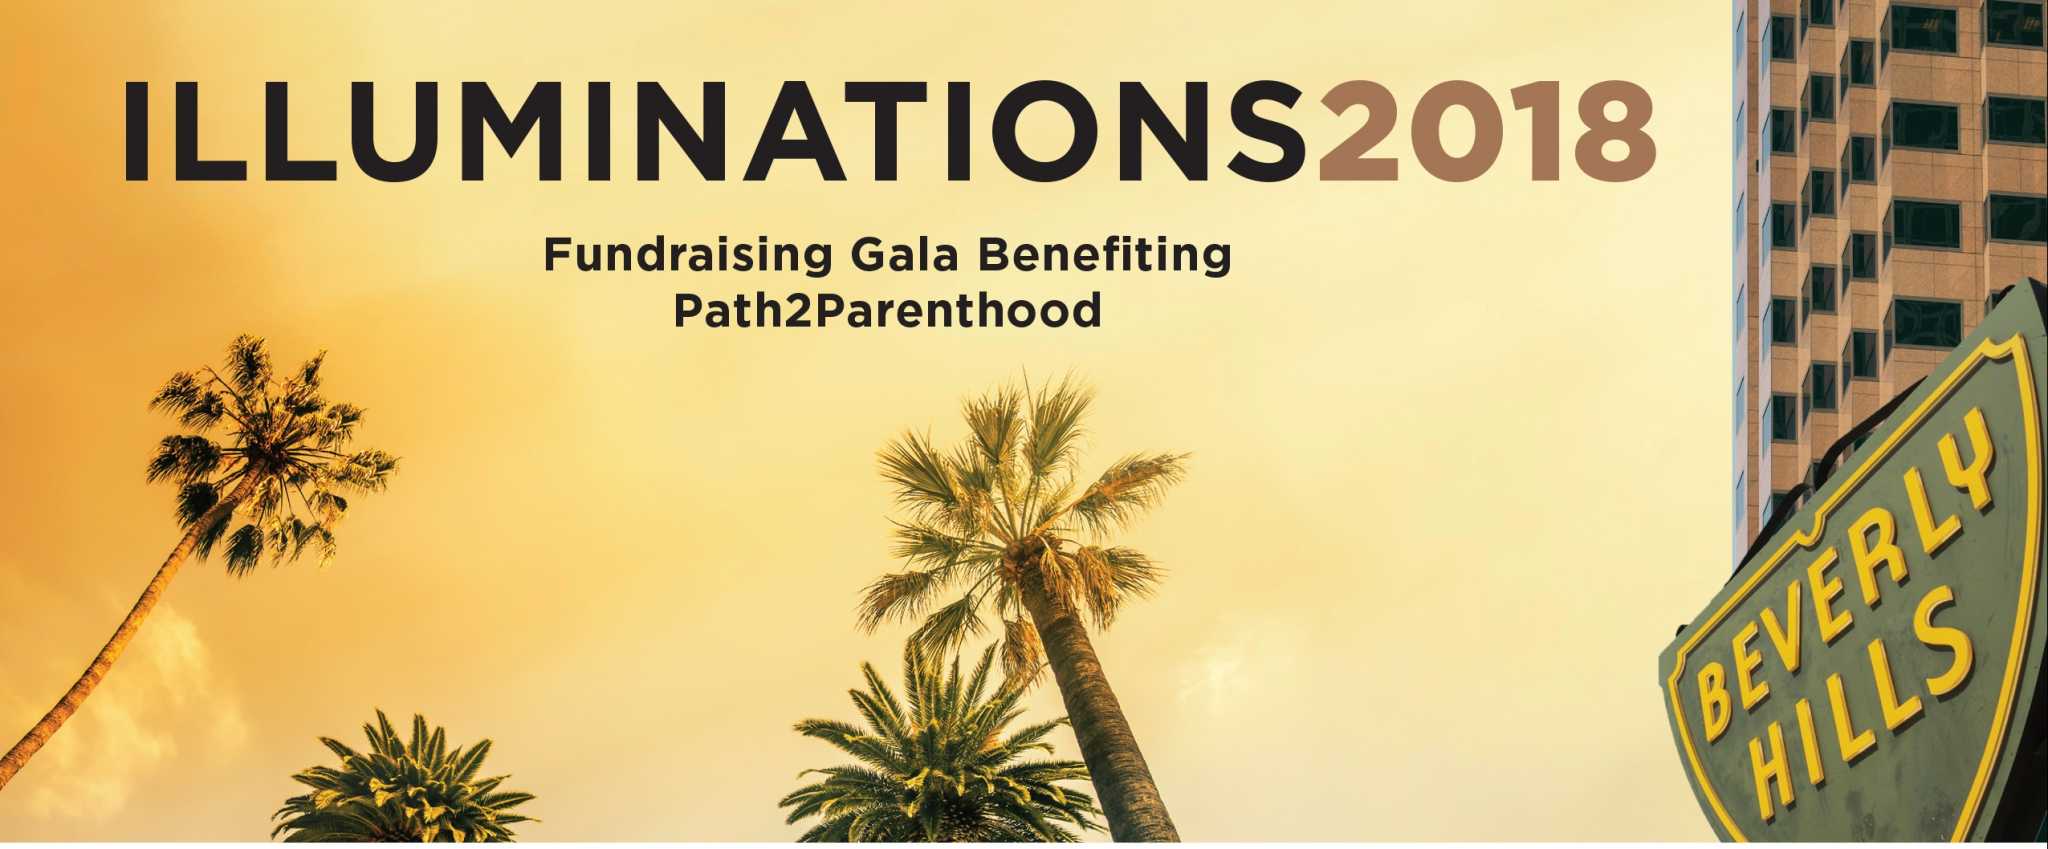 illuminations • fundraising gala for path2parenthood